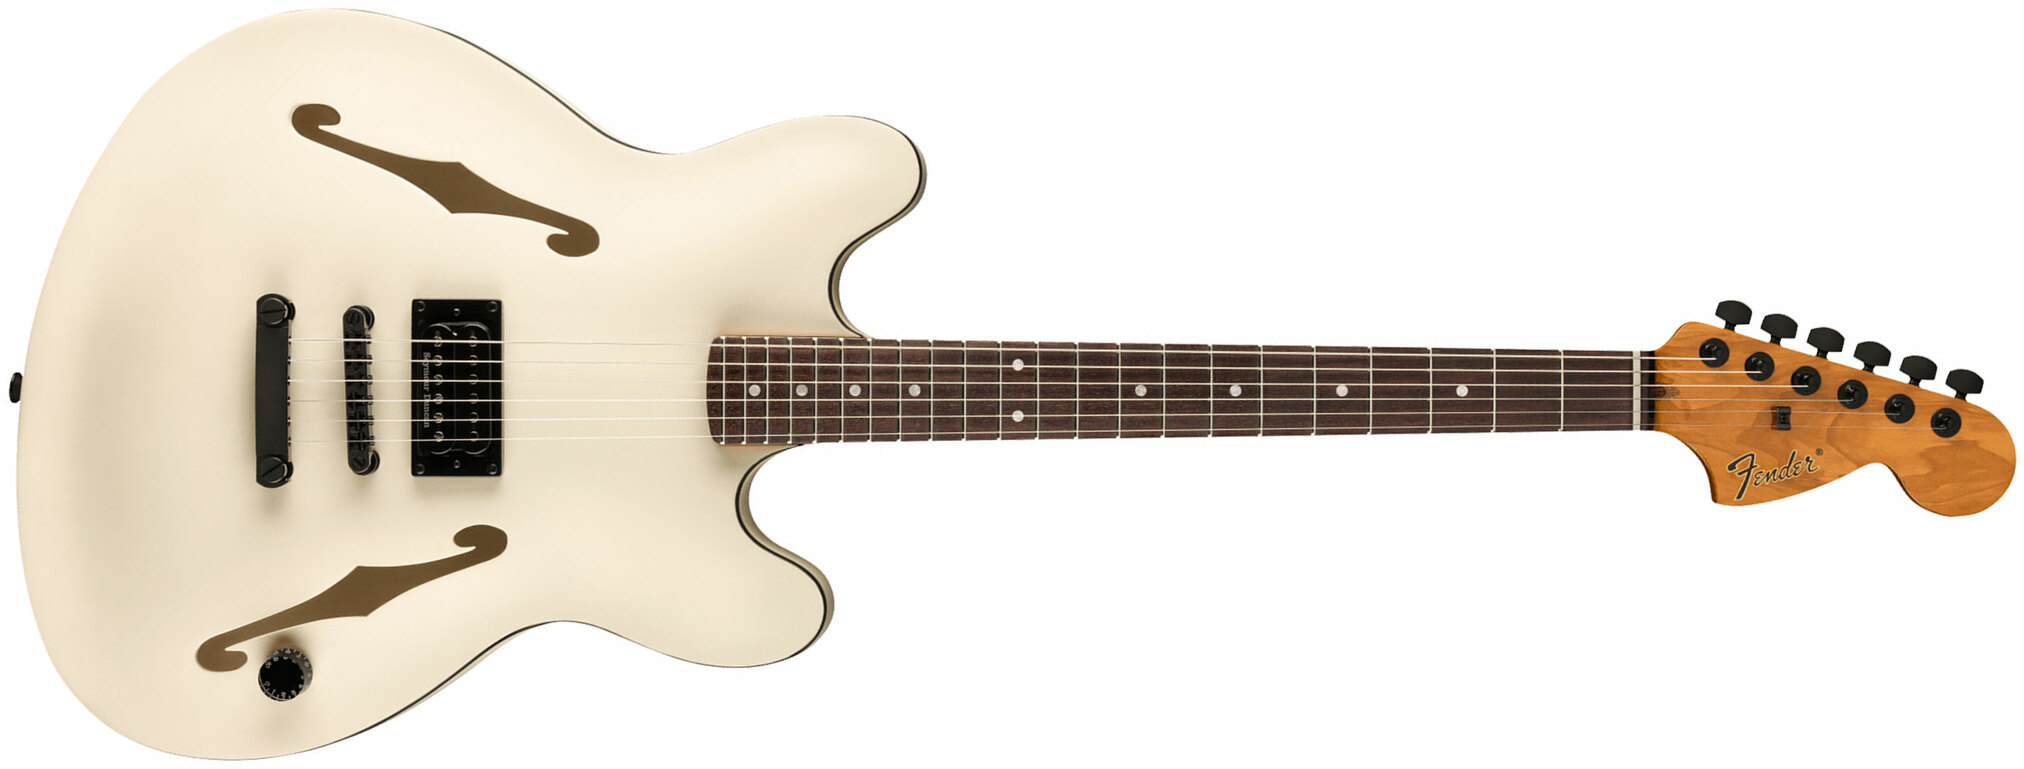 Fender Tom Delonge Starcaster Signature 1h Seymour Duncan Ht Rw - Satin Olympic White - Guitarra eléctrica semi caja - Main picture